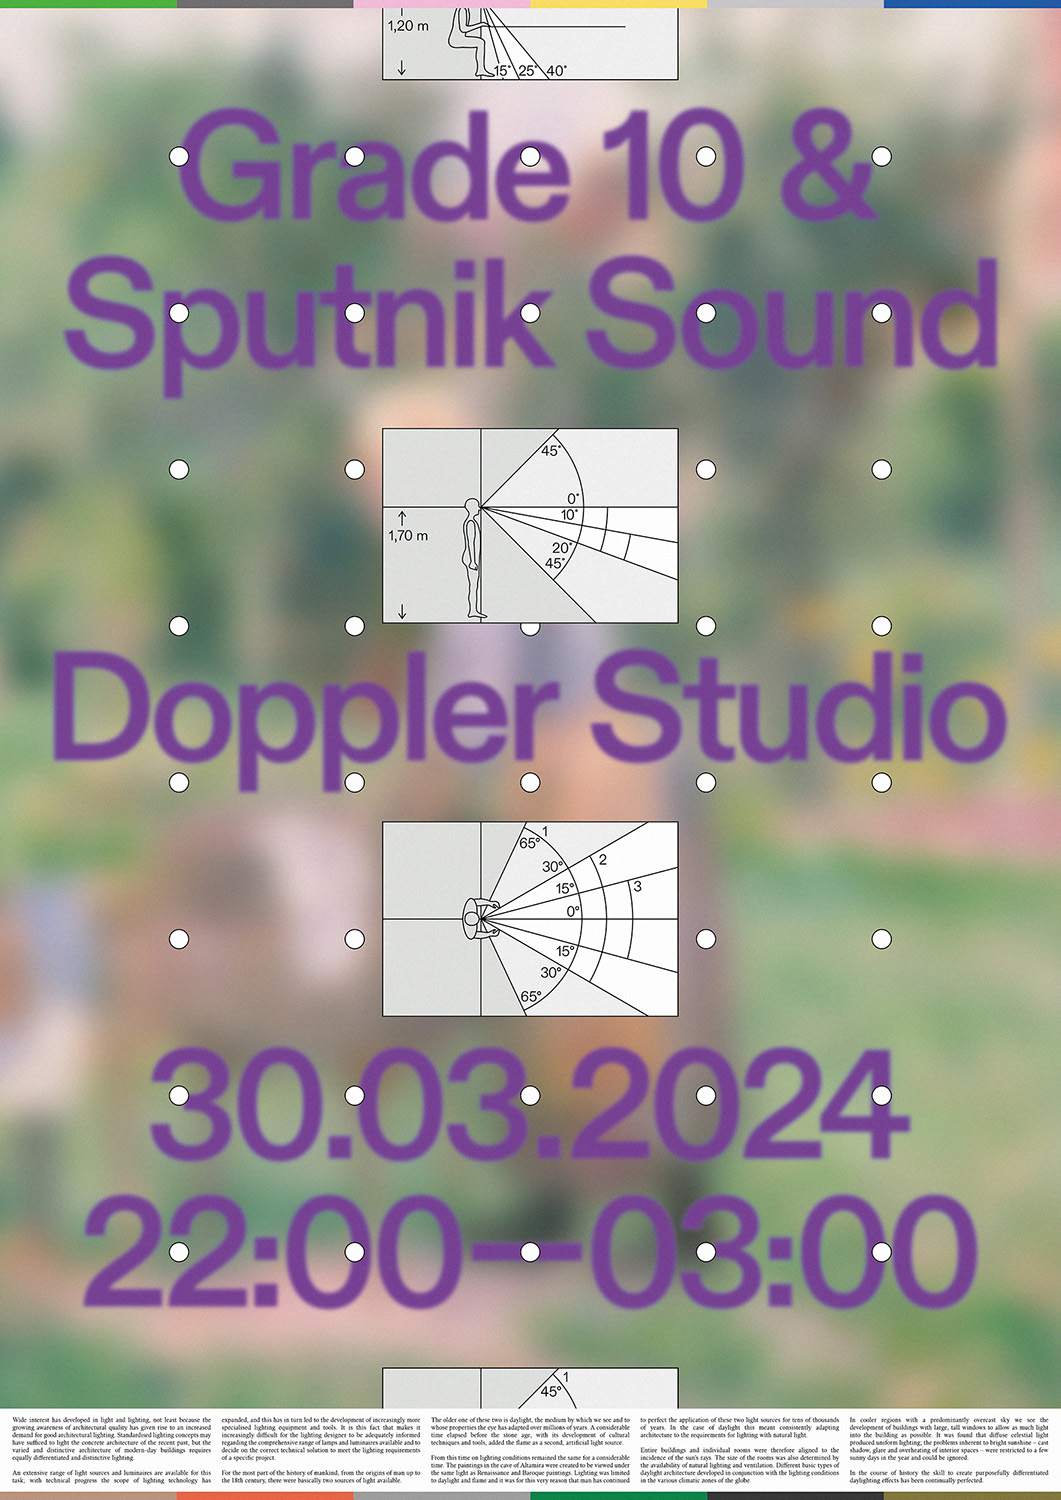 Grade 10 & Sputnik Sound - フライヤー表